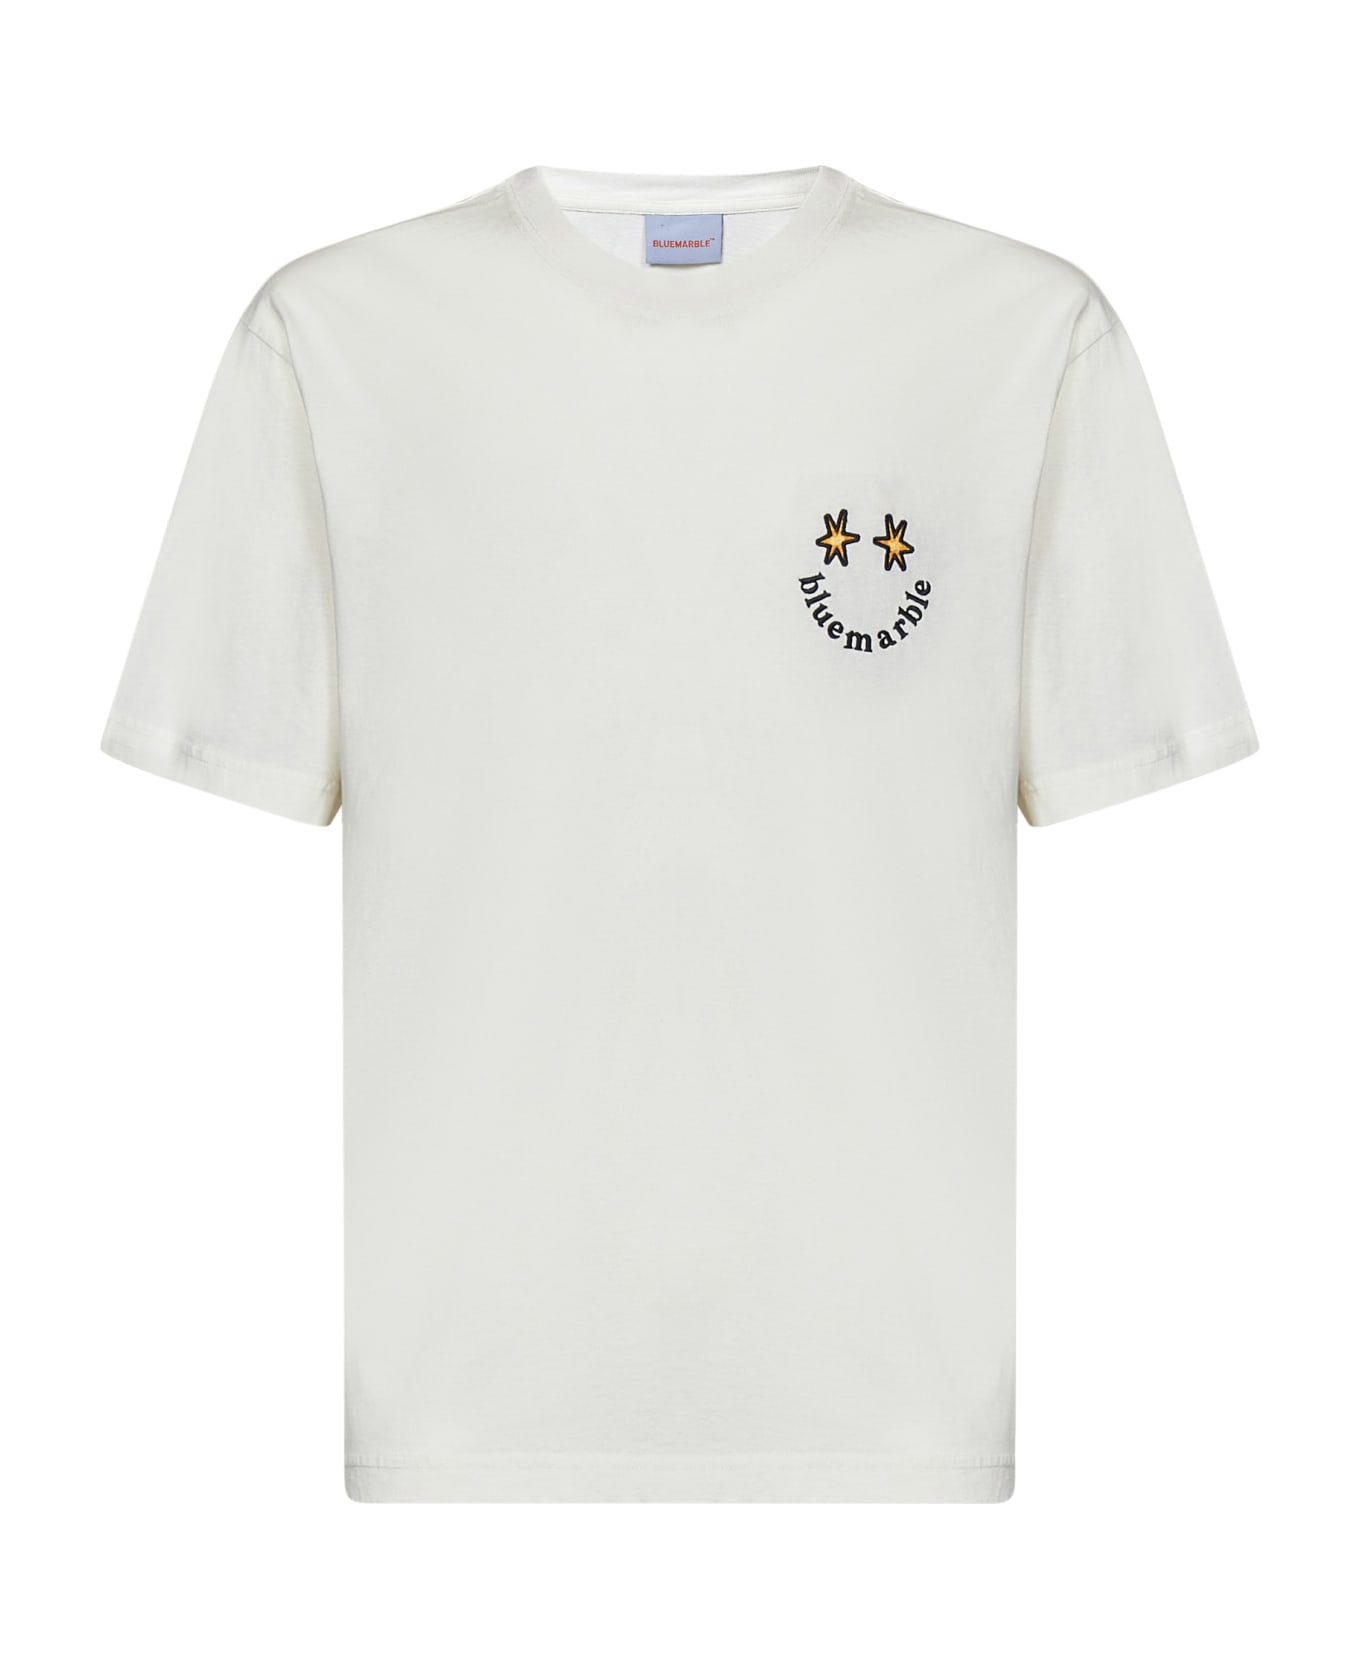 Bluemarble T-shirt - White シャツ